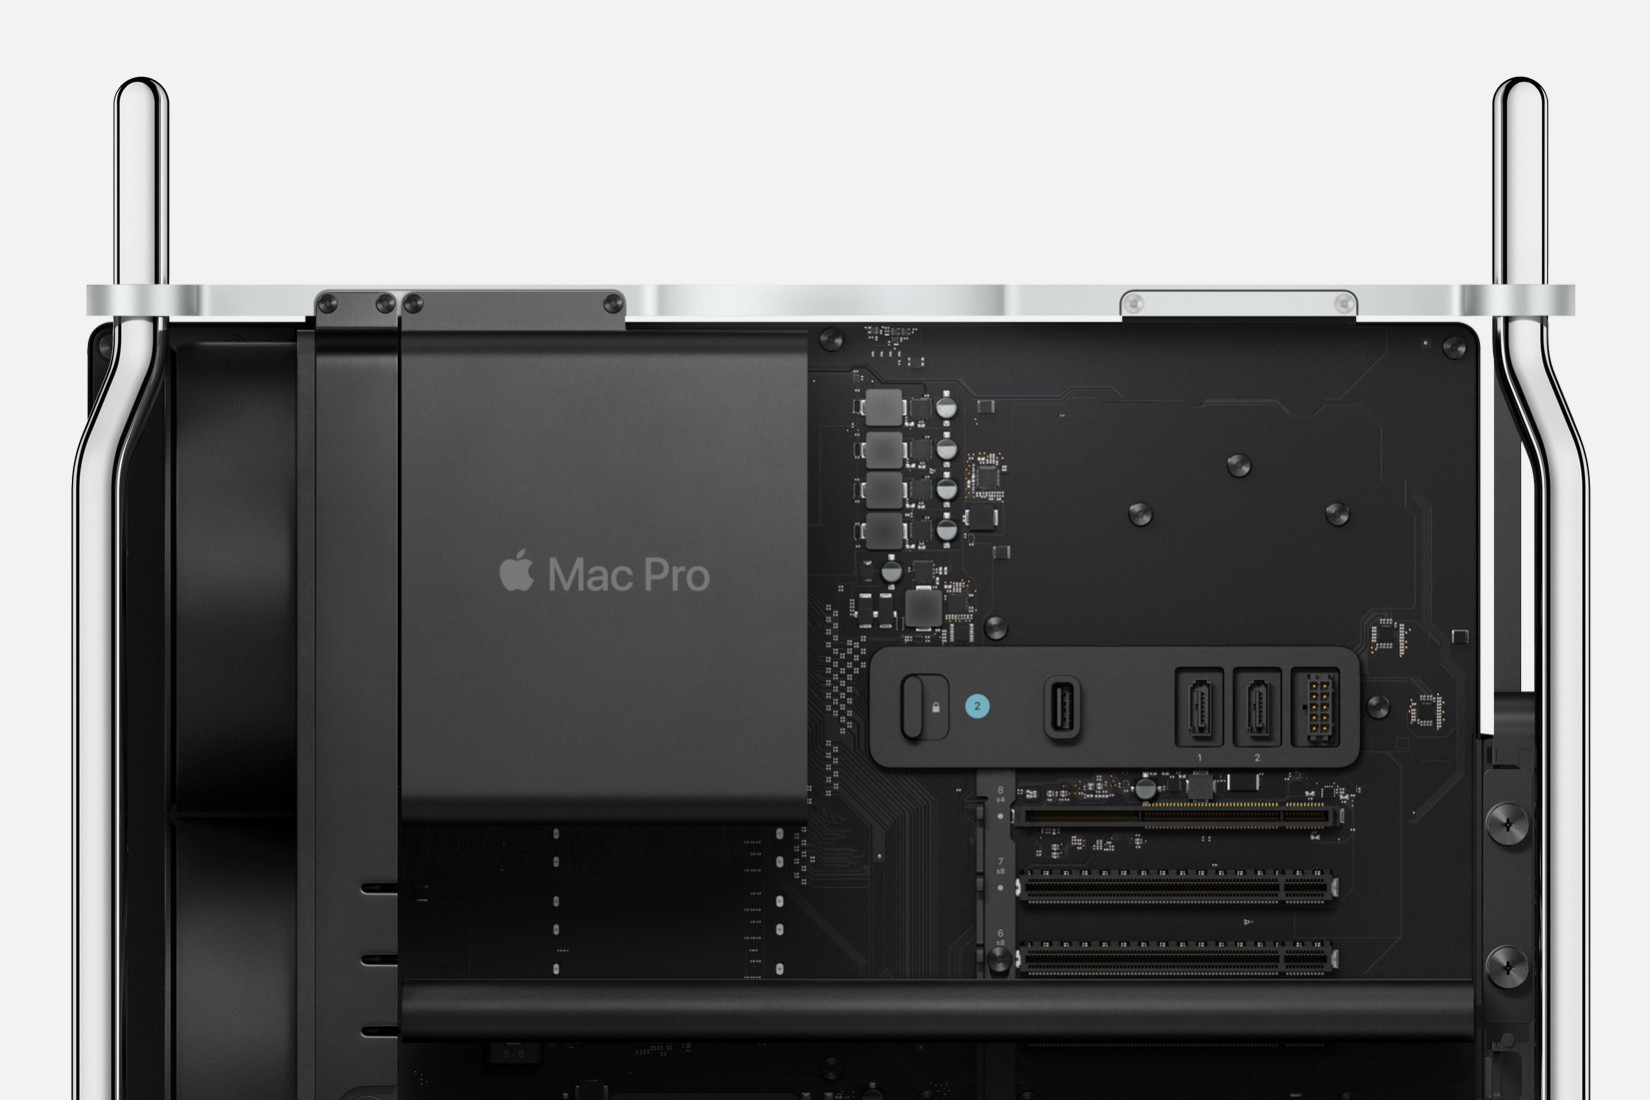 instal the new for mac True Burner Pro 9.6